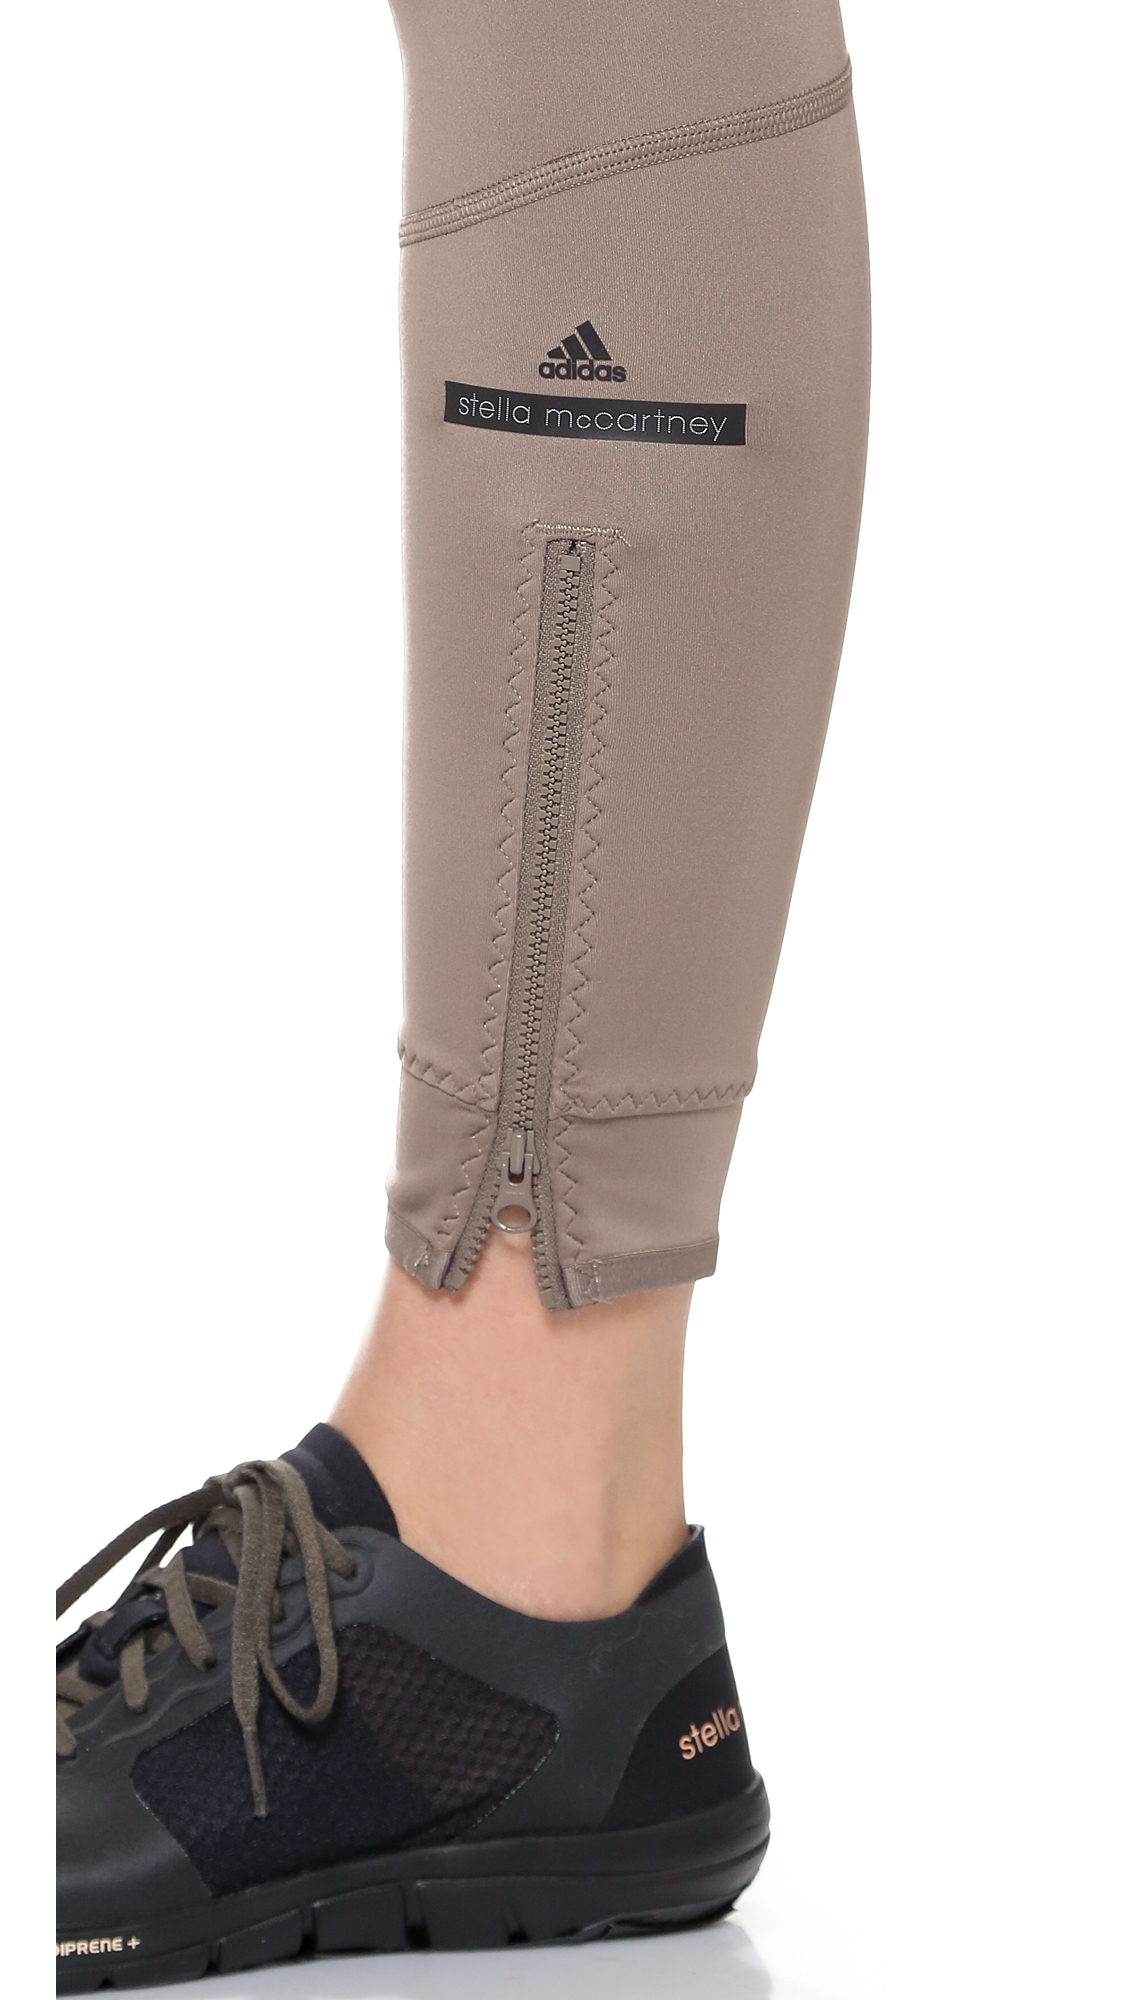 https://cdna.lystit.com/photos/5573-2015/07/02/adidas-by-stella-mccartney-cement-grey-78-leggings-cement-grey-gray-product-0-063872205-normal.jpeg